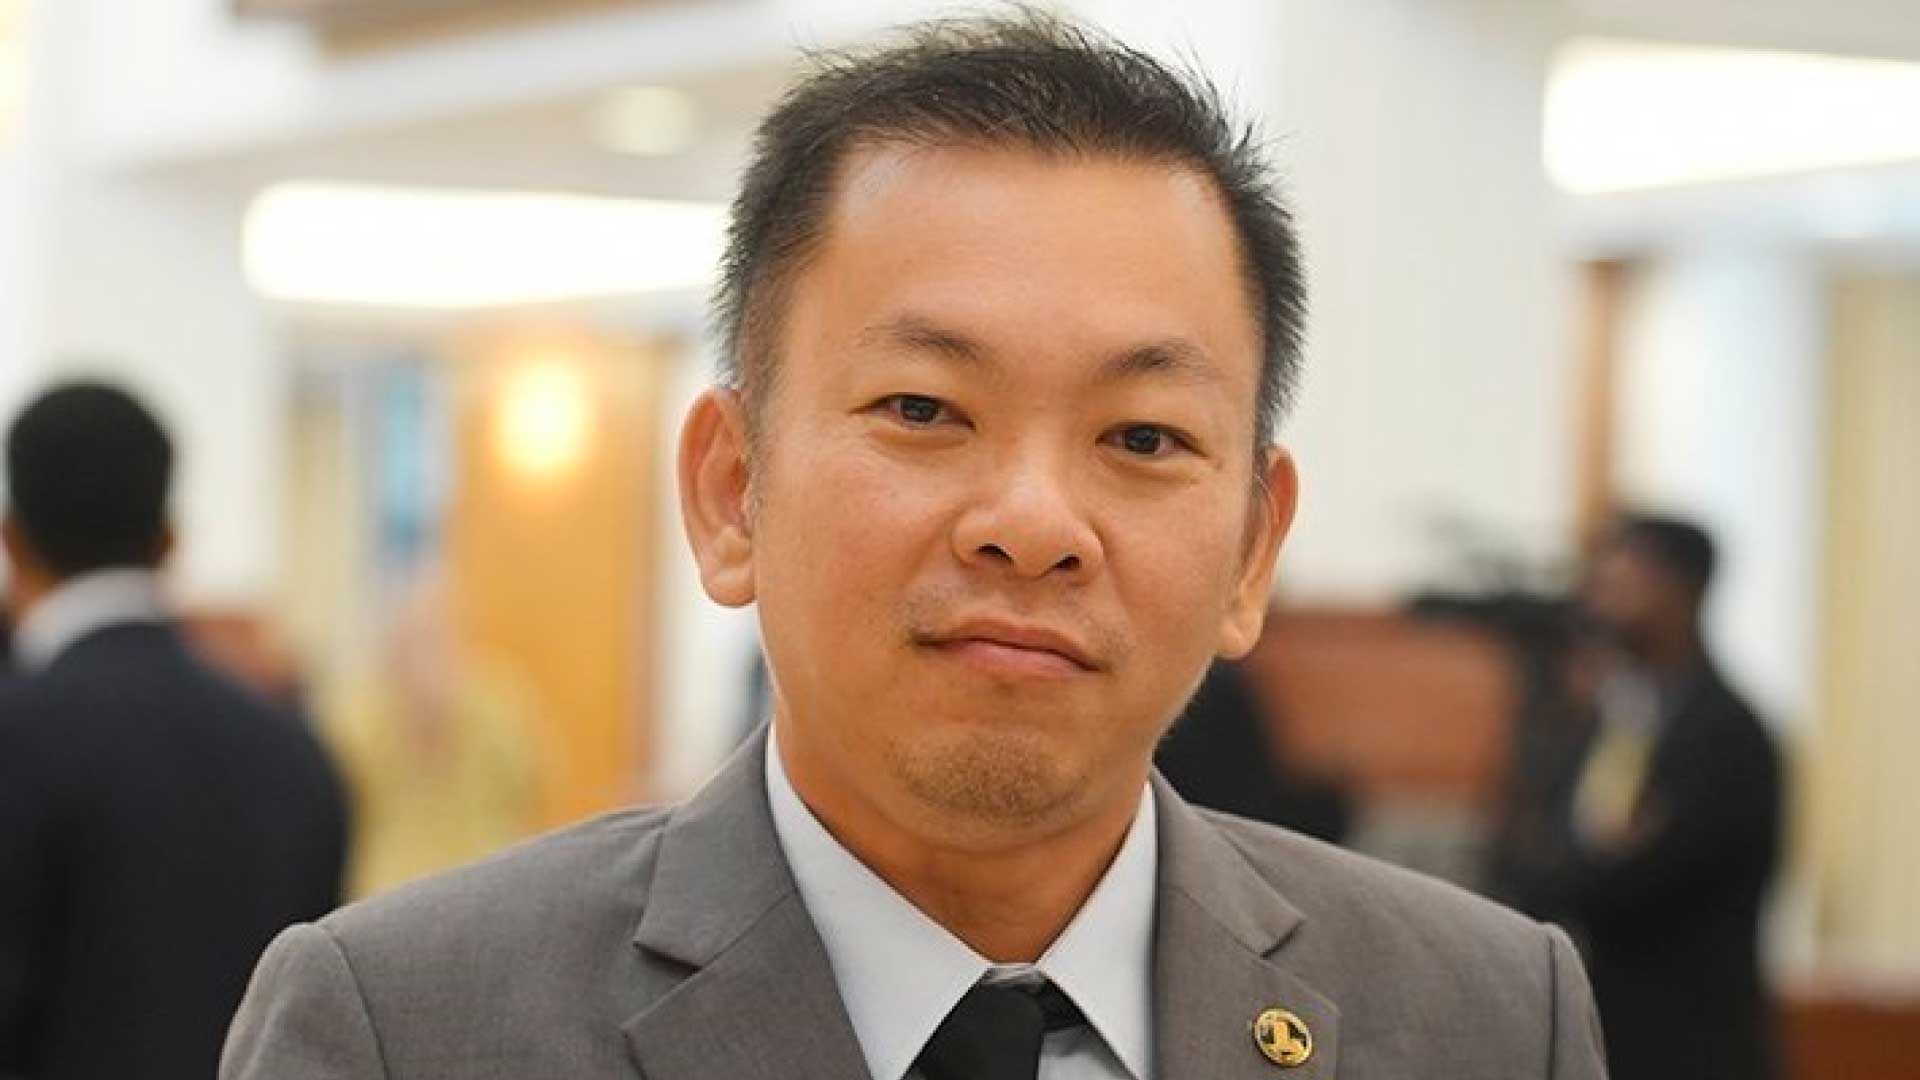 Chan Foong Hin Kota Kinabalu MP